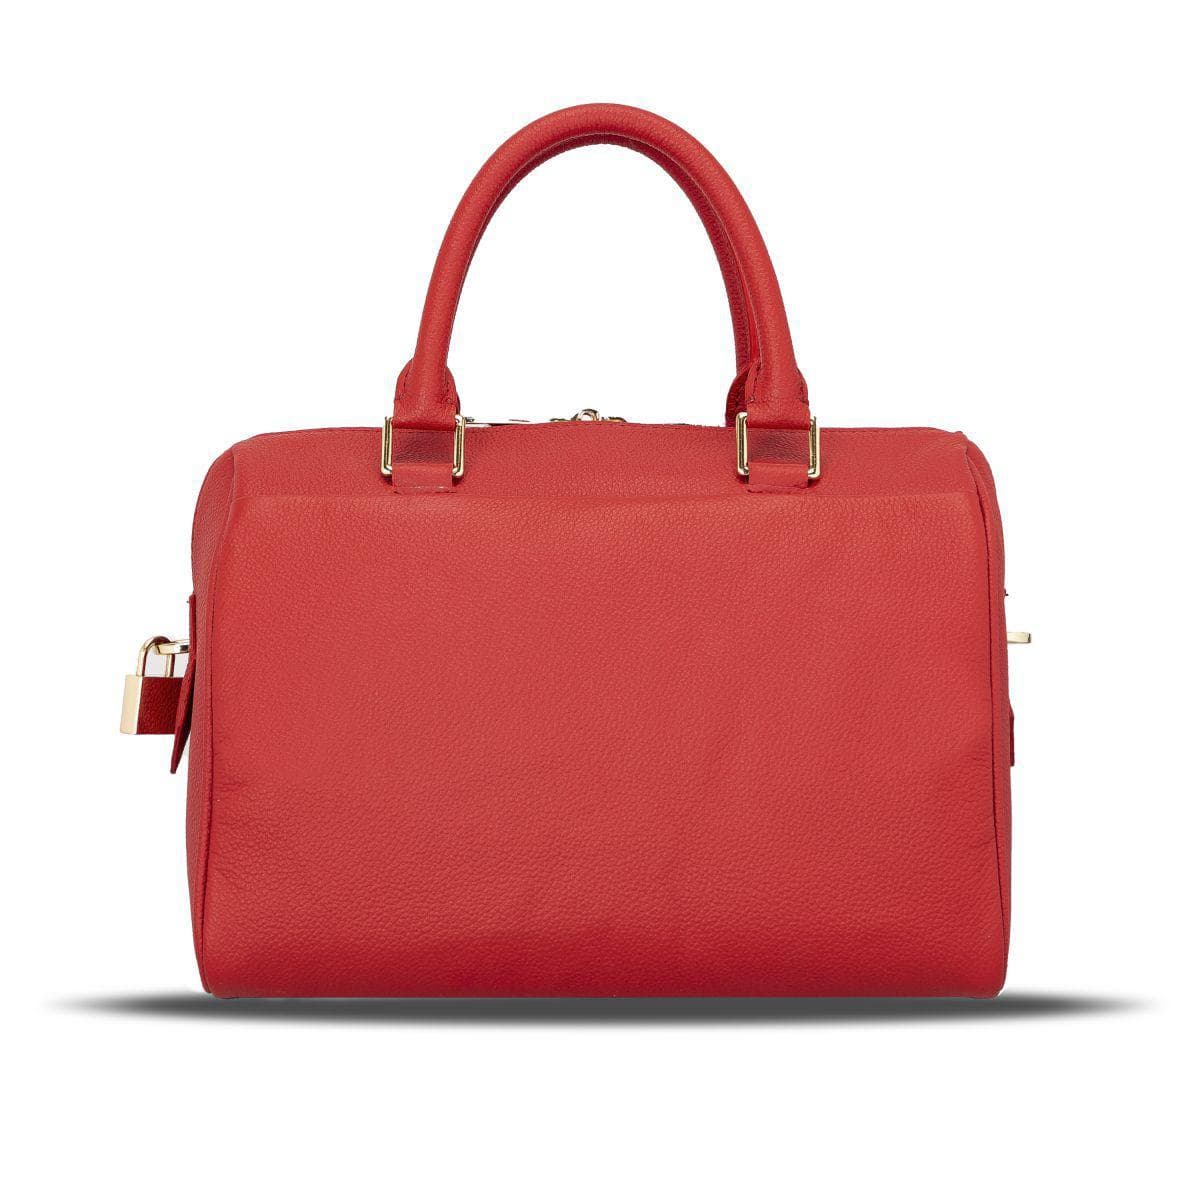 Shine Women's Leather Handbags Bouletta Shop